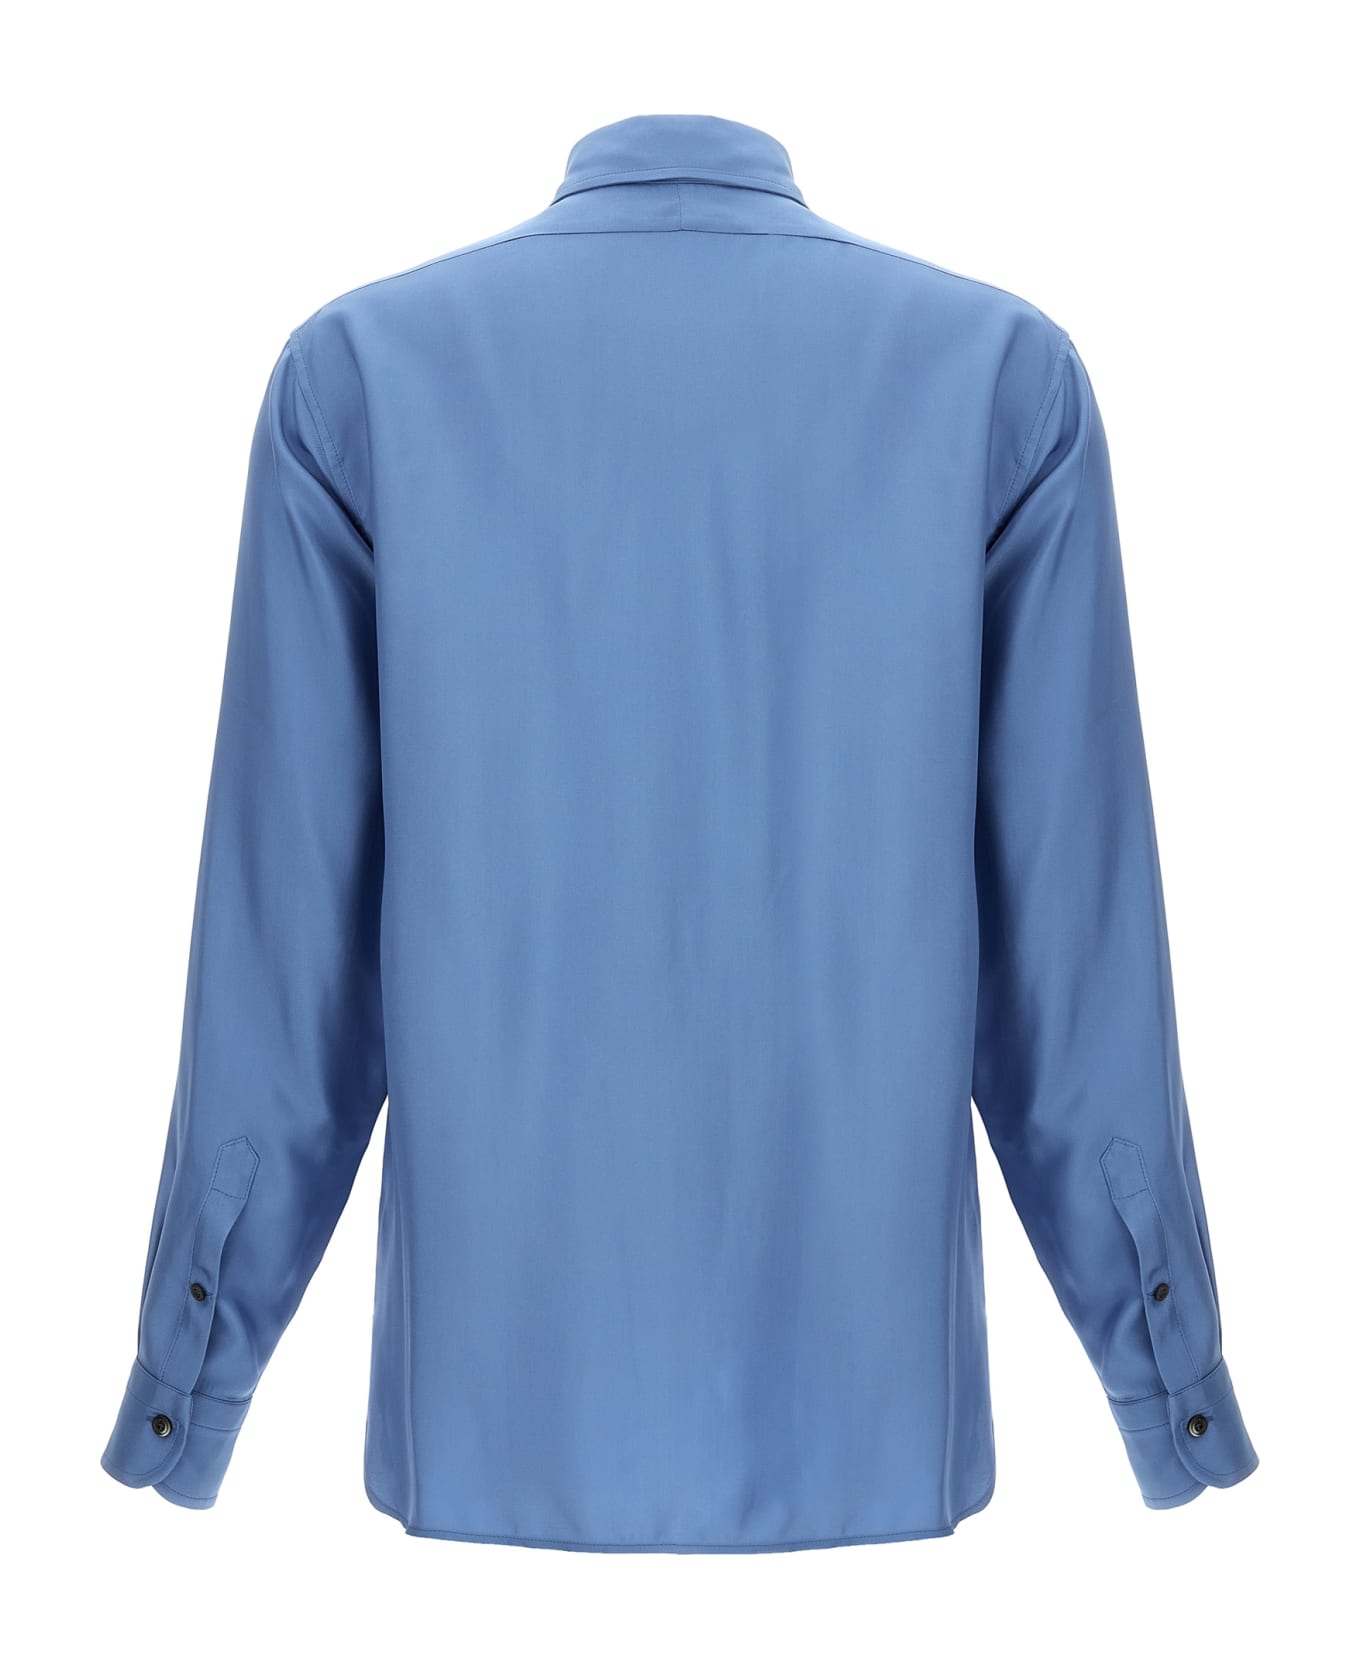 Tom Ford Pleated Plastron Shirt - Light Blue